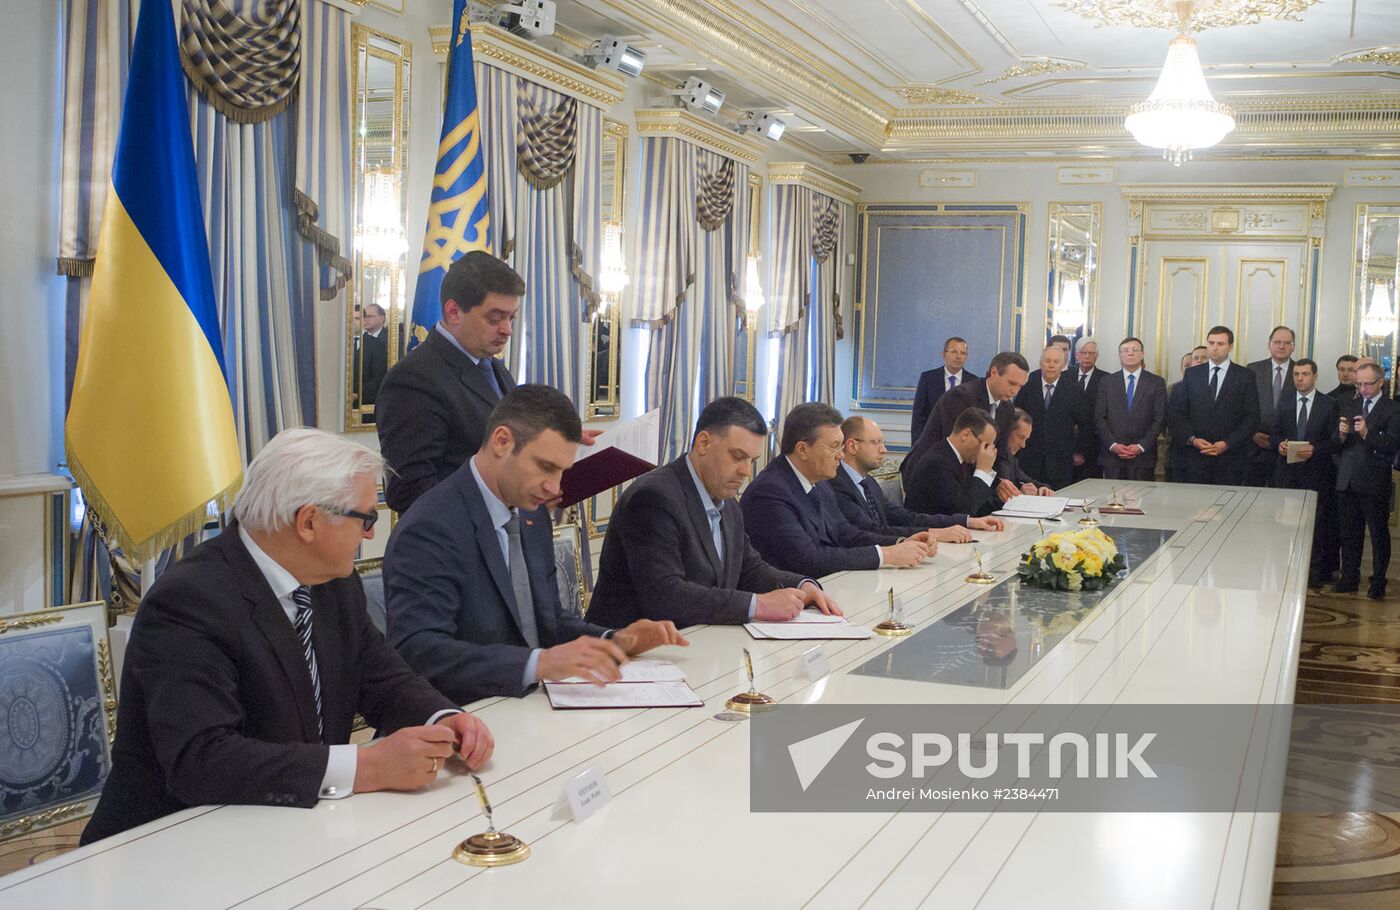 Agreement on resolving crisis in Ukraine signed